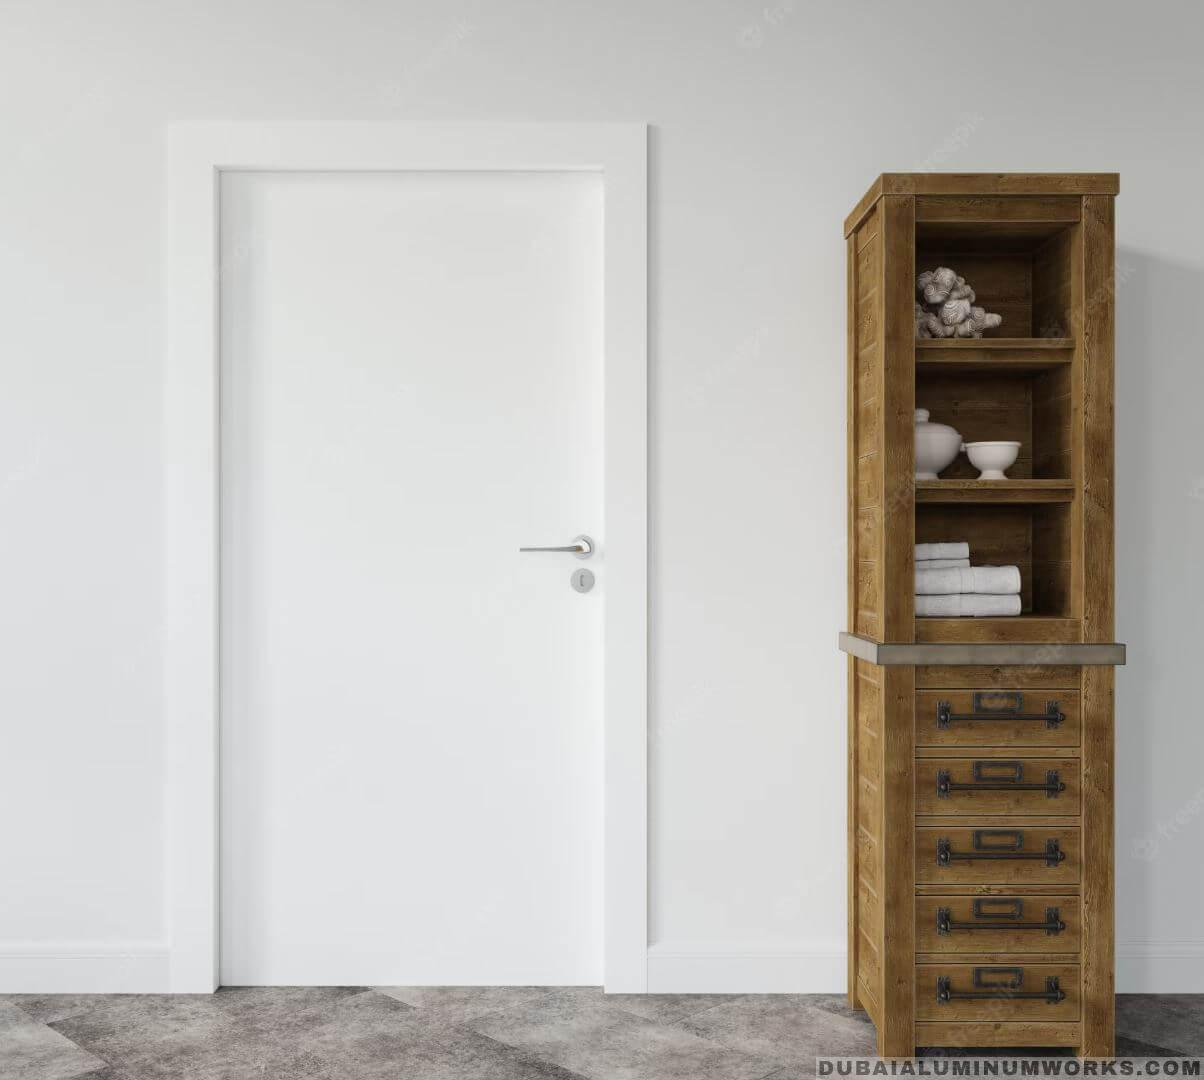 Buy Best Aluminium Bathroom Door in Dubai @ Amazing Deals